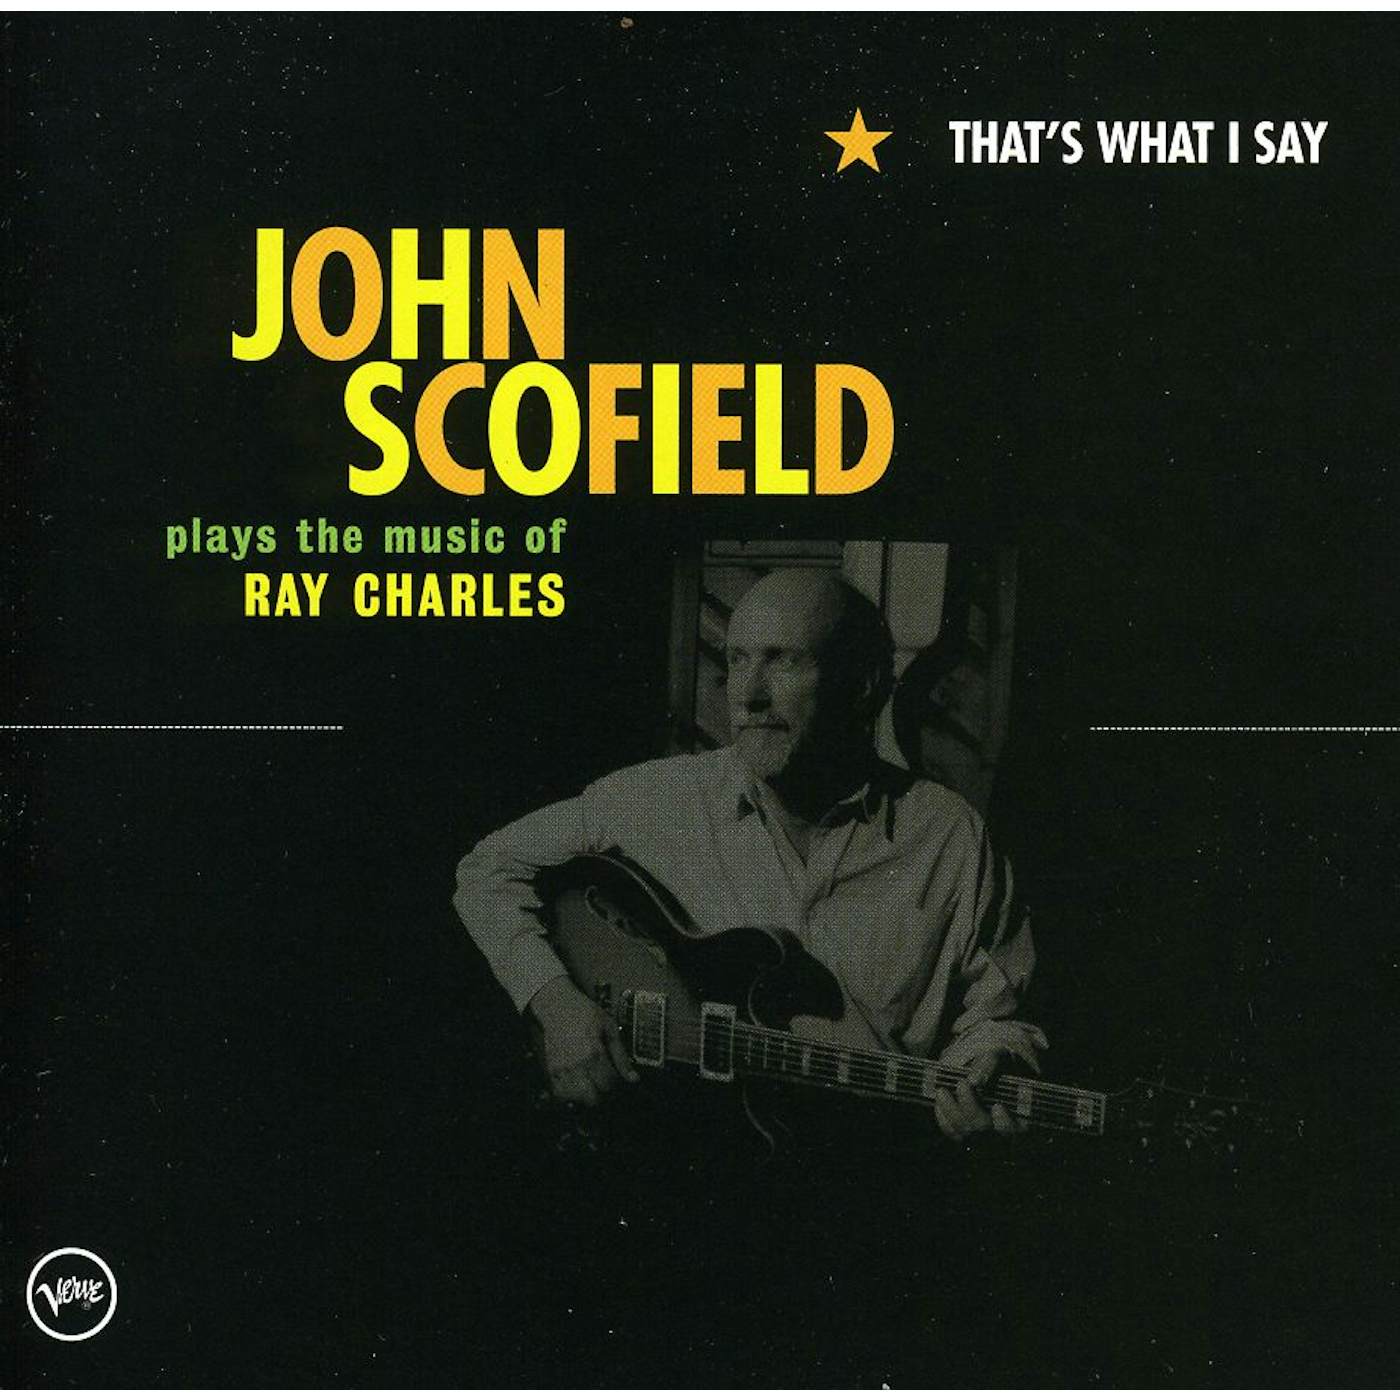 John Scofield THAT'S WHAT I SAY CD